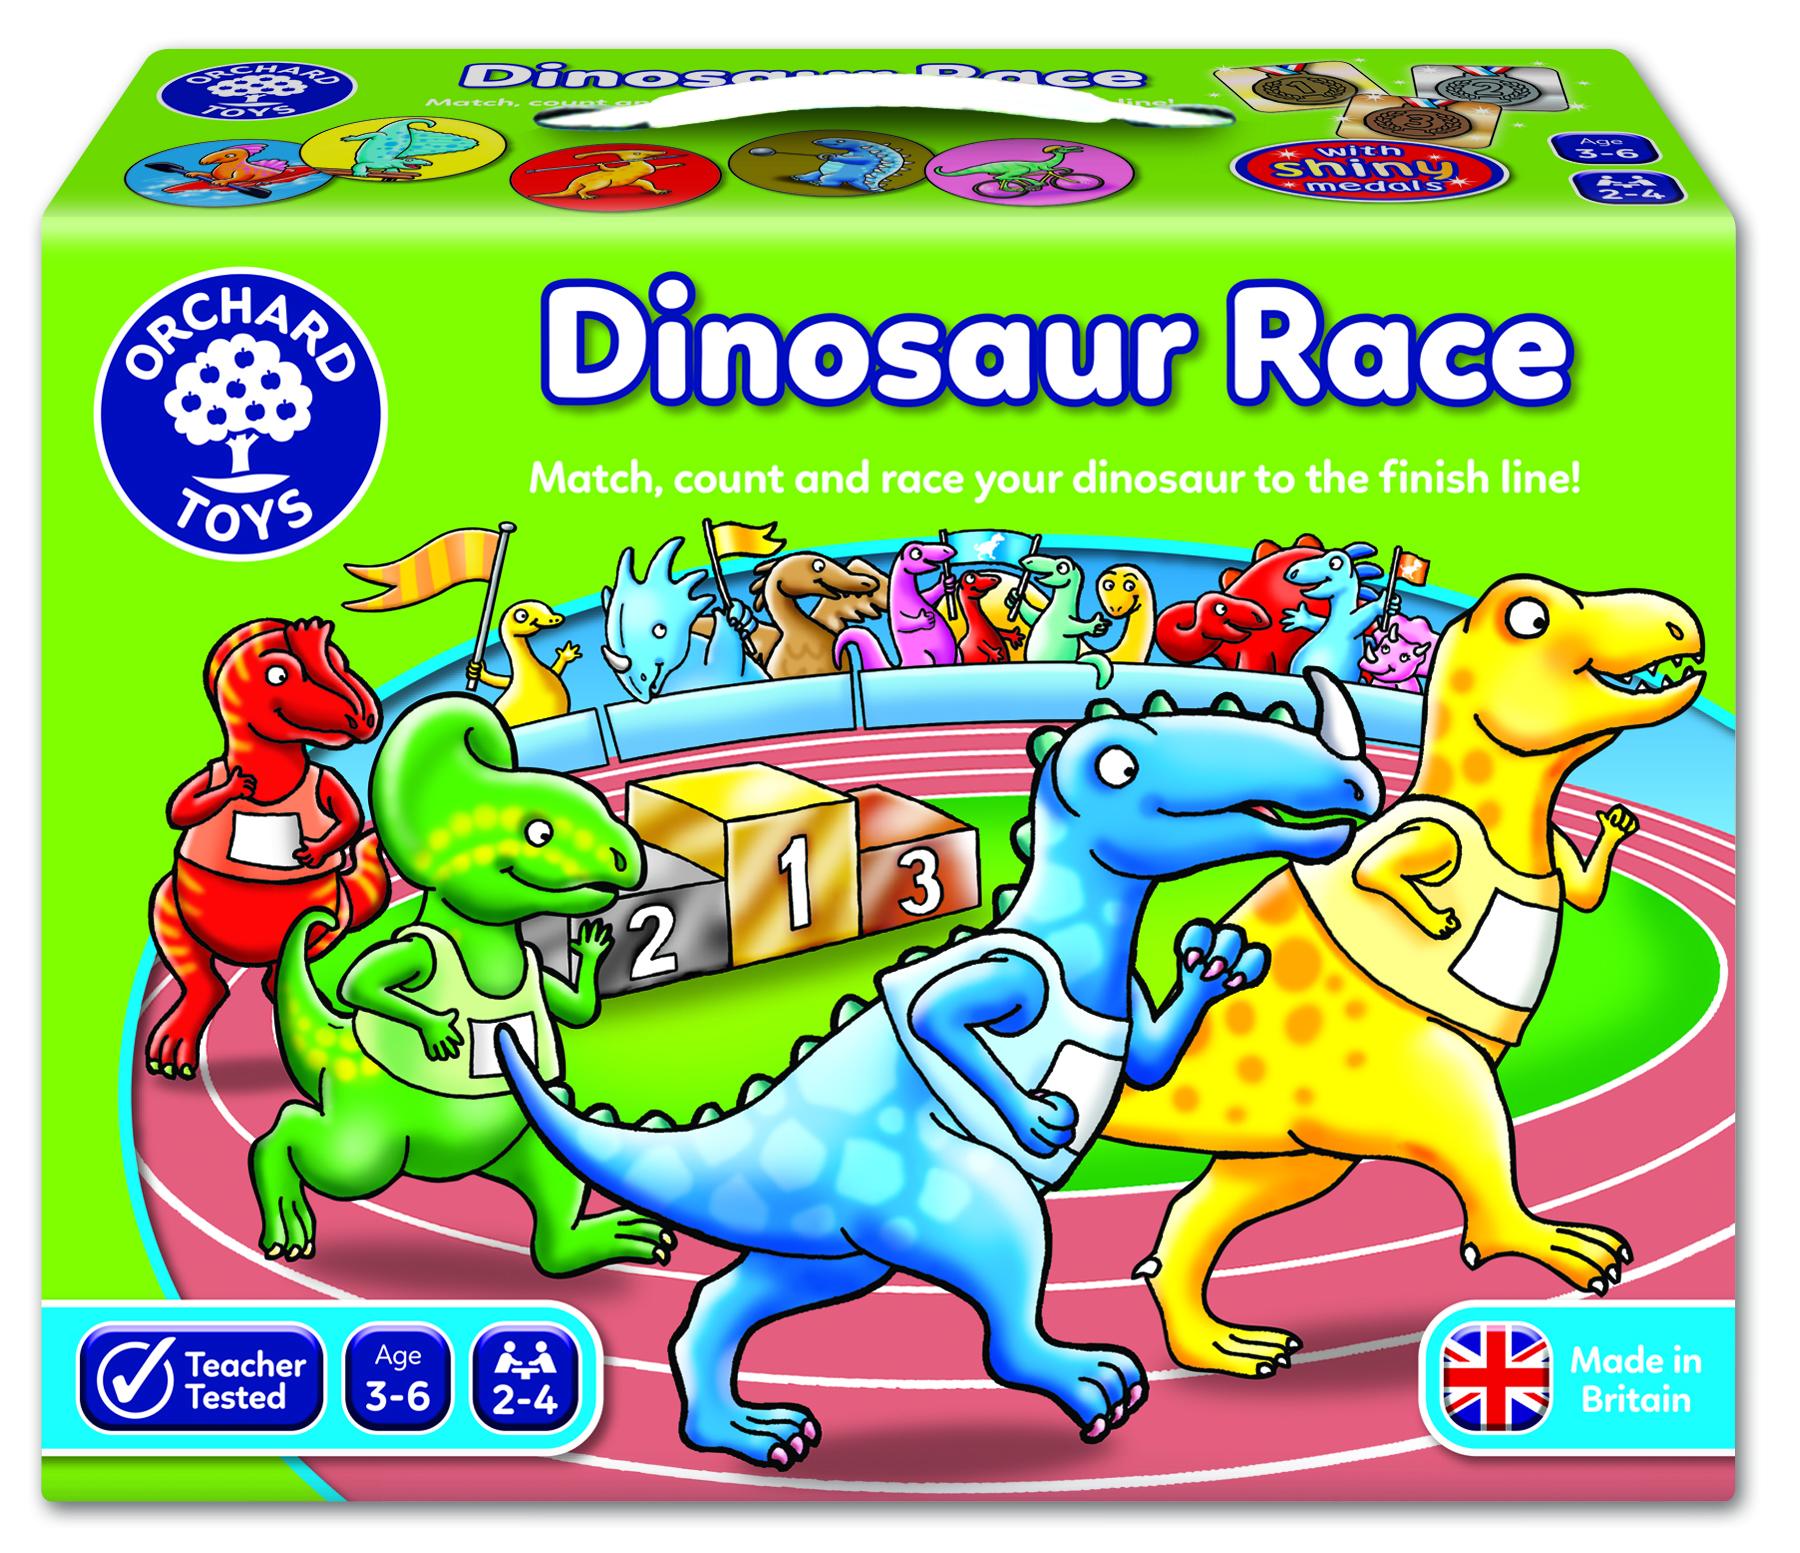 Orchard Toys Dinosaur Race game